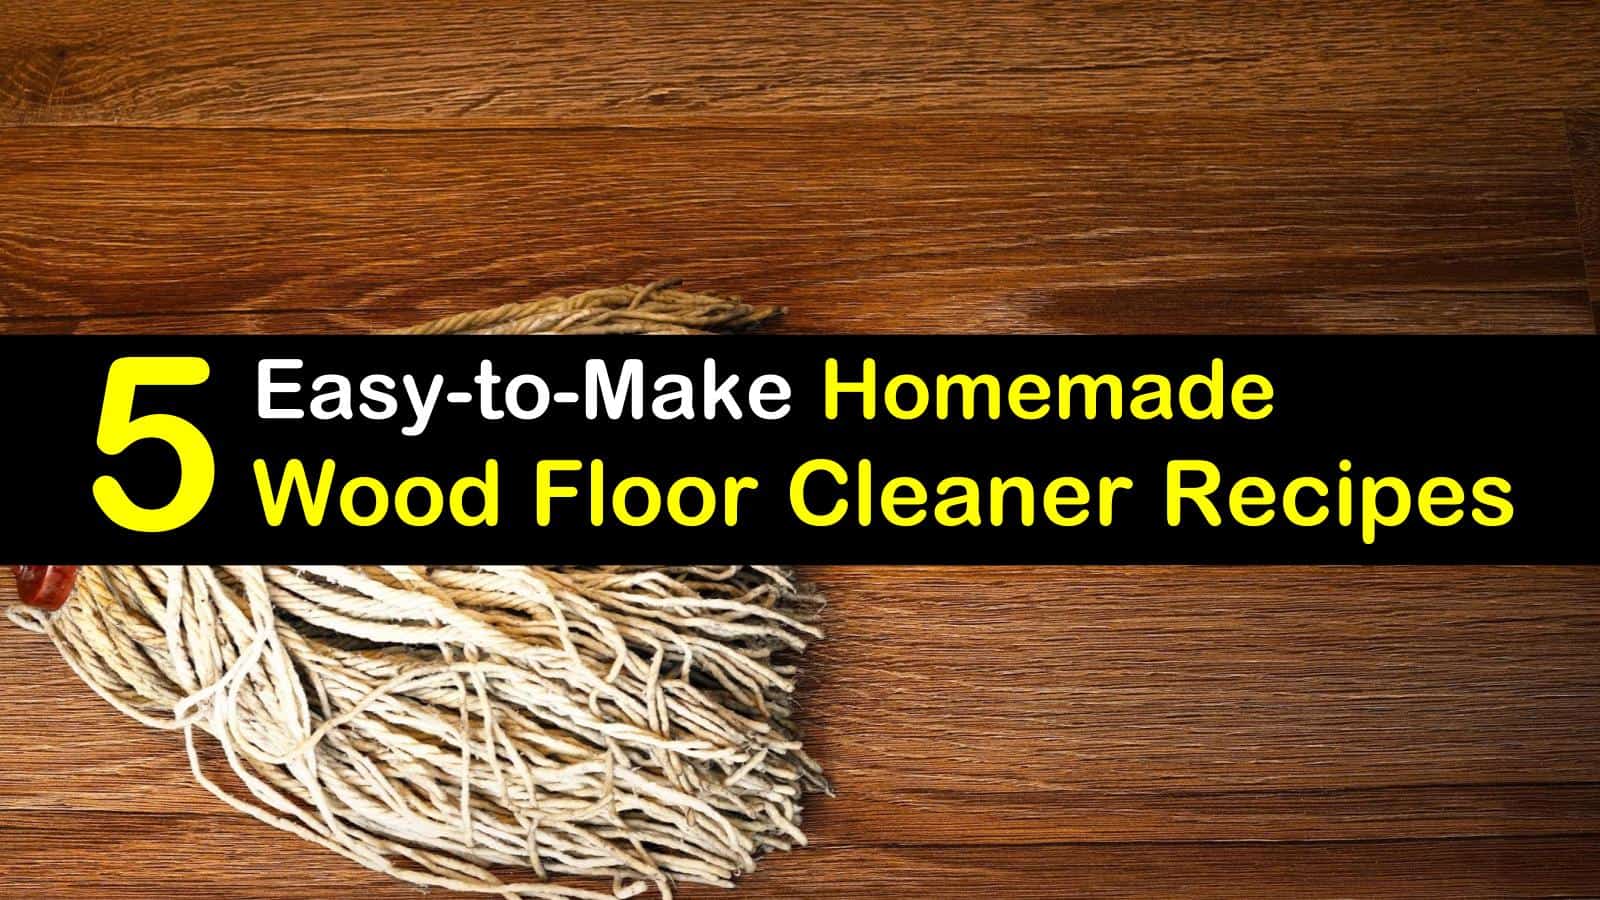 Homemade Wood Floor Cleaner, What’s Best To Clean Hardwood Floors